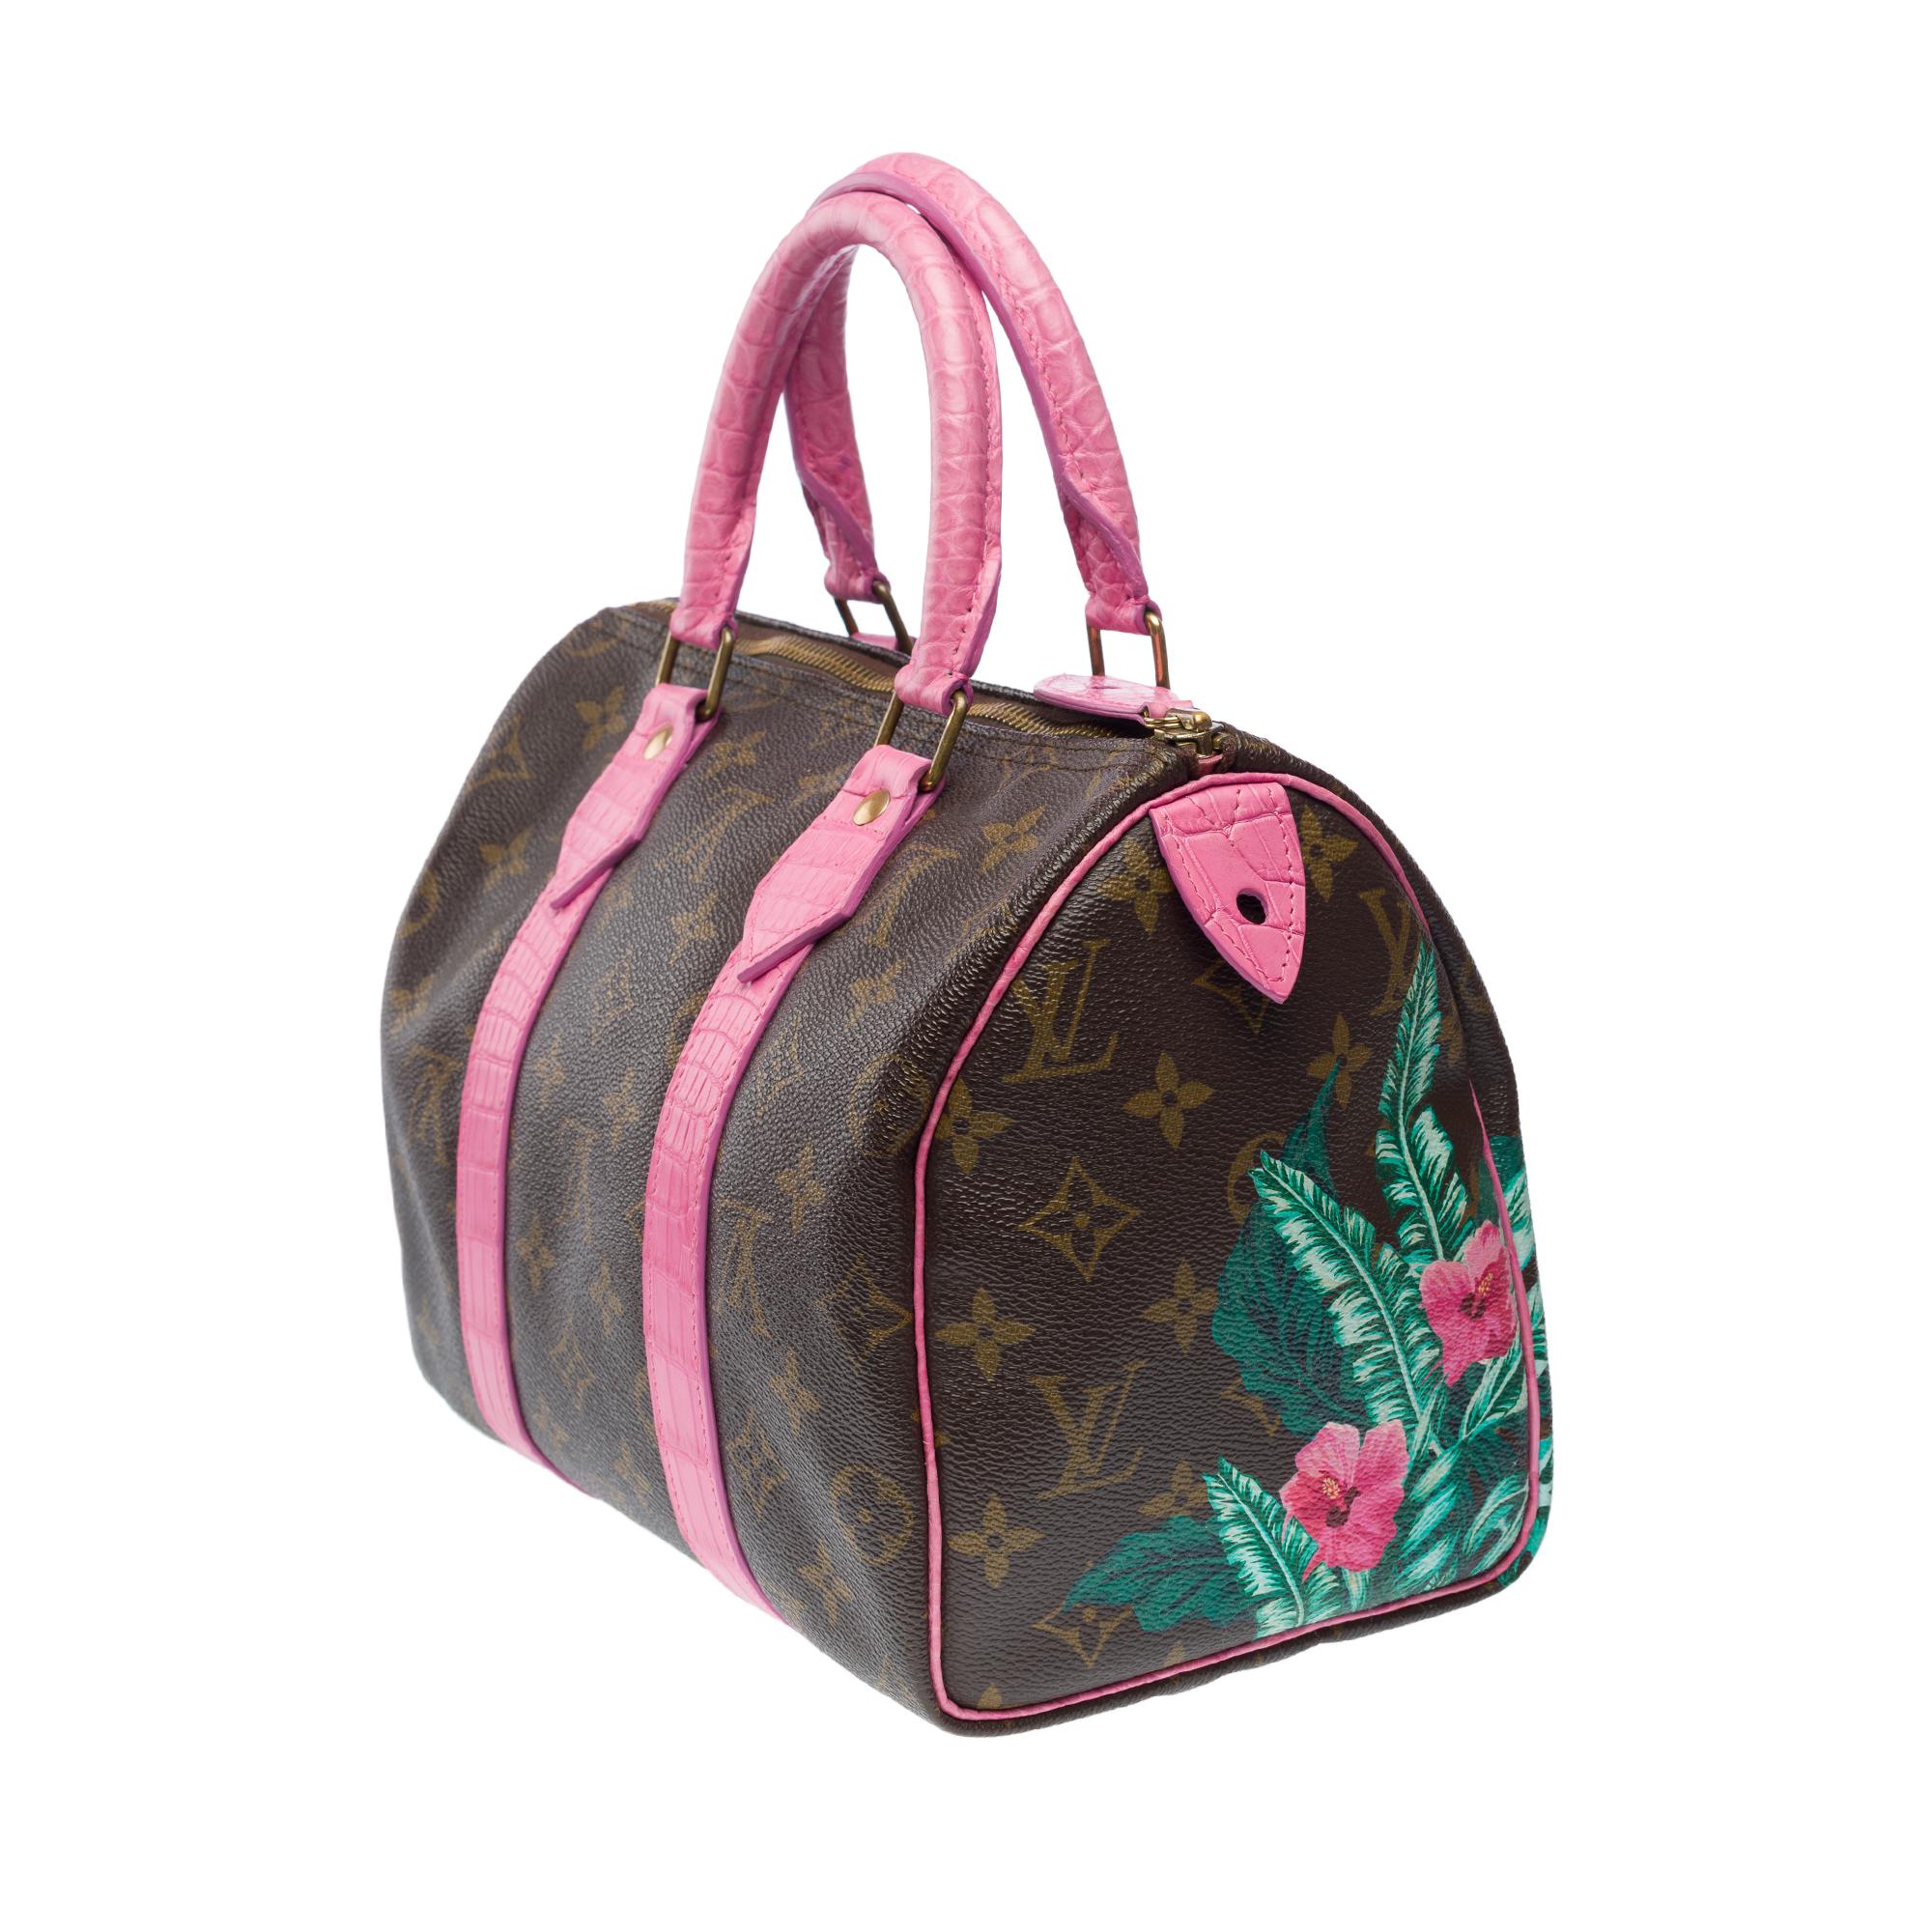 Customized Louis Vuitton Speedy 25 handbag Flowers with Pink Crocodile leather 1